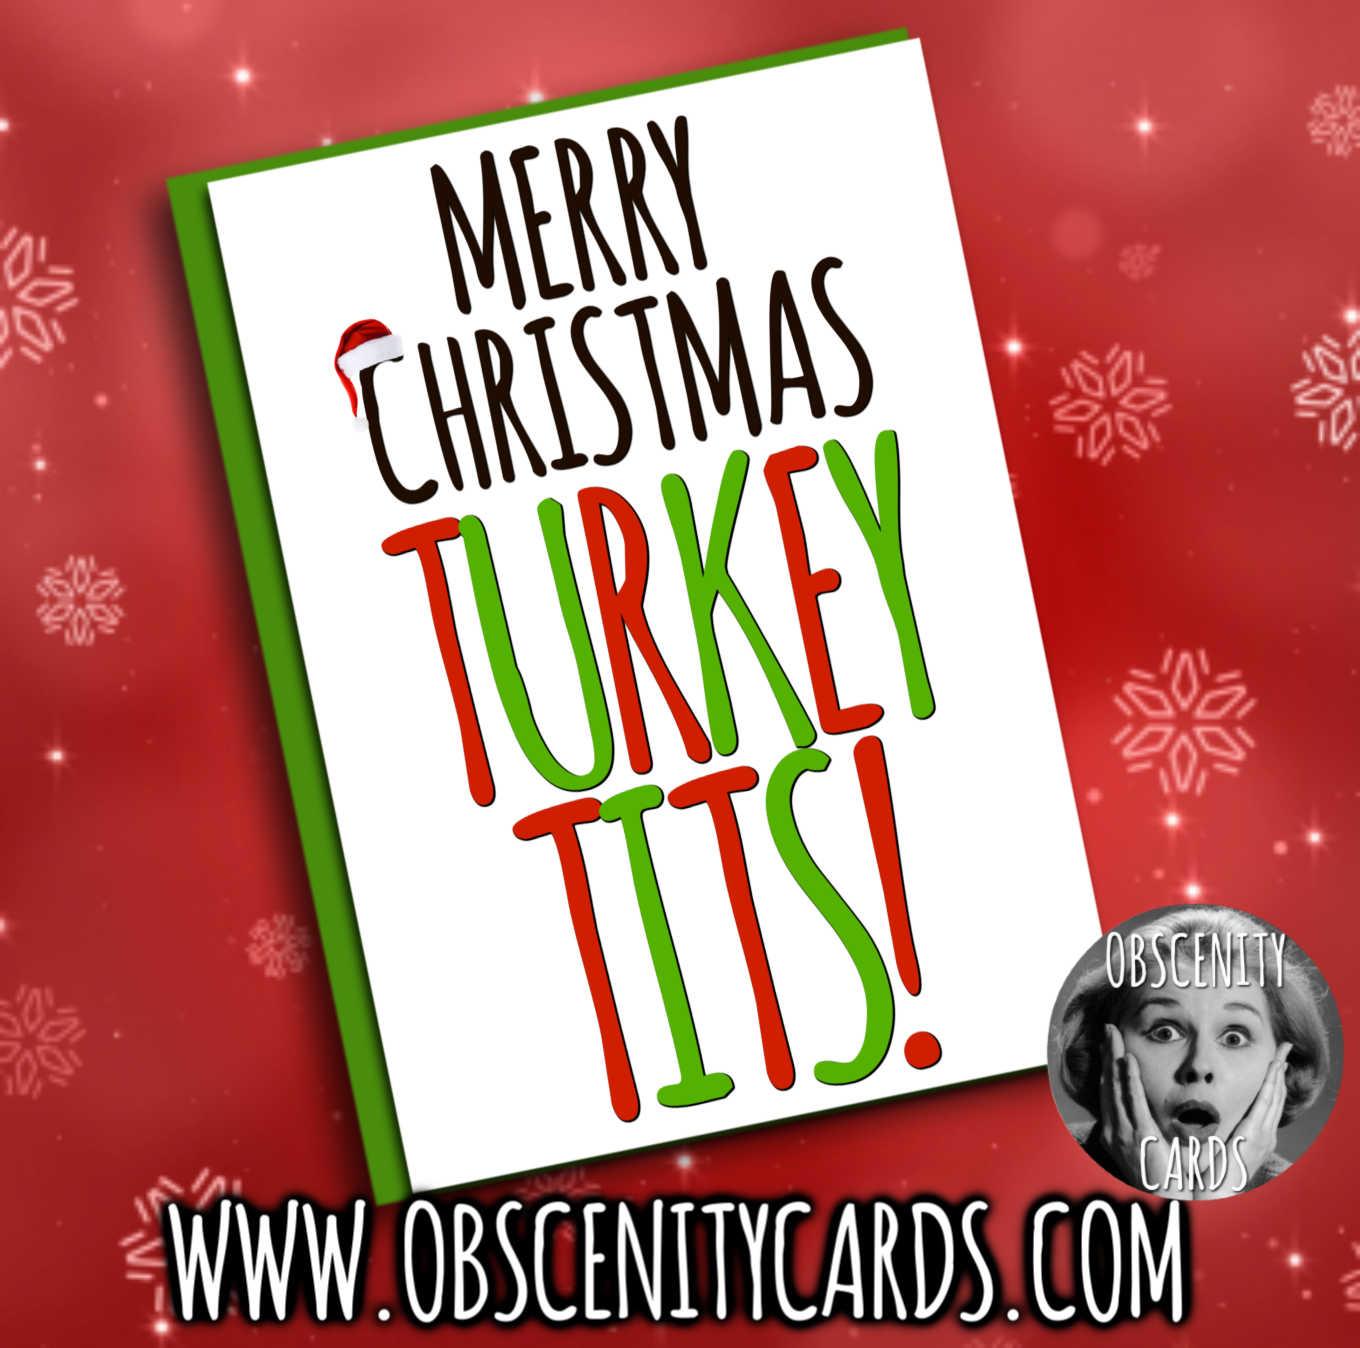 MERRY CHRISTMAS TURKEY TITS CARD